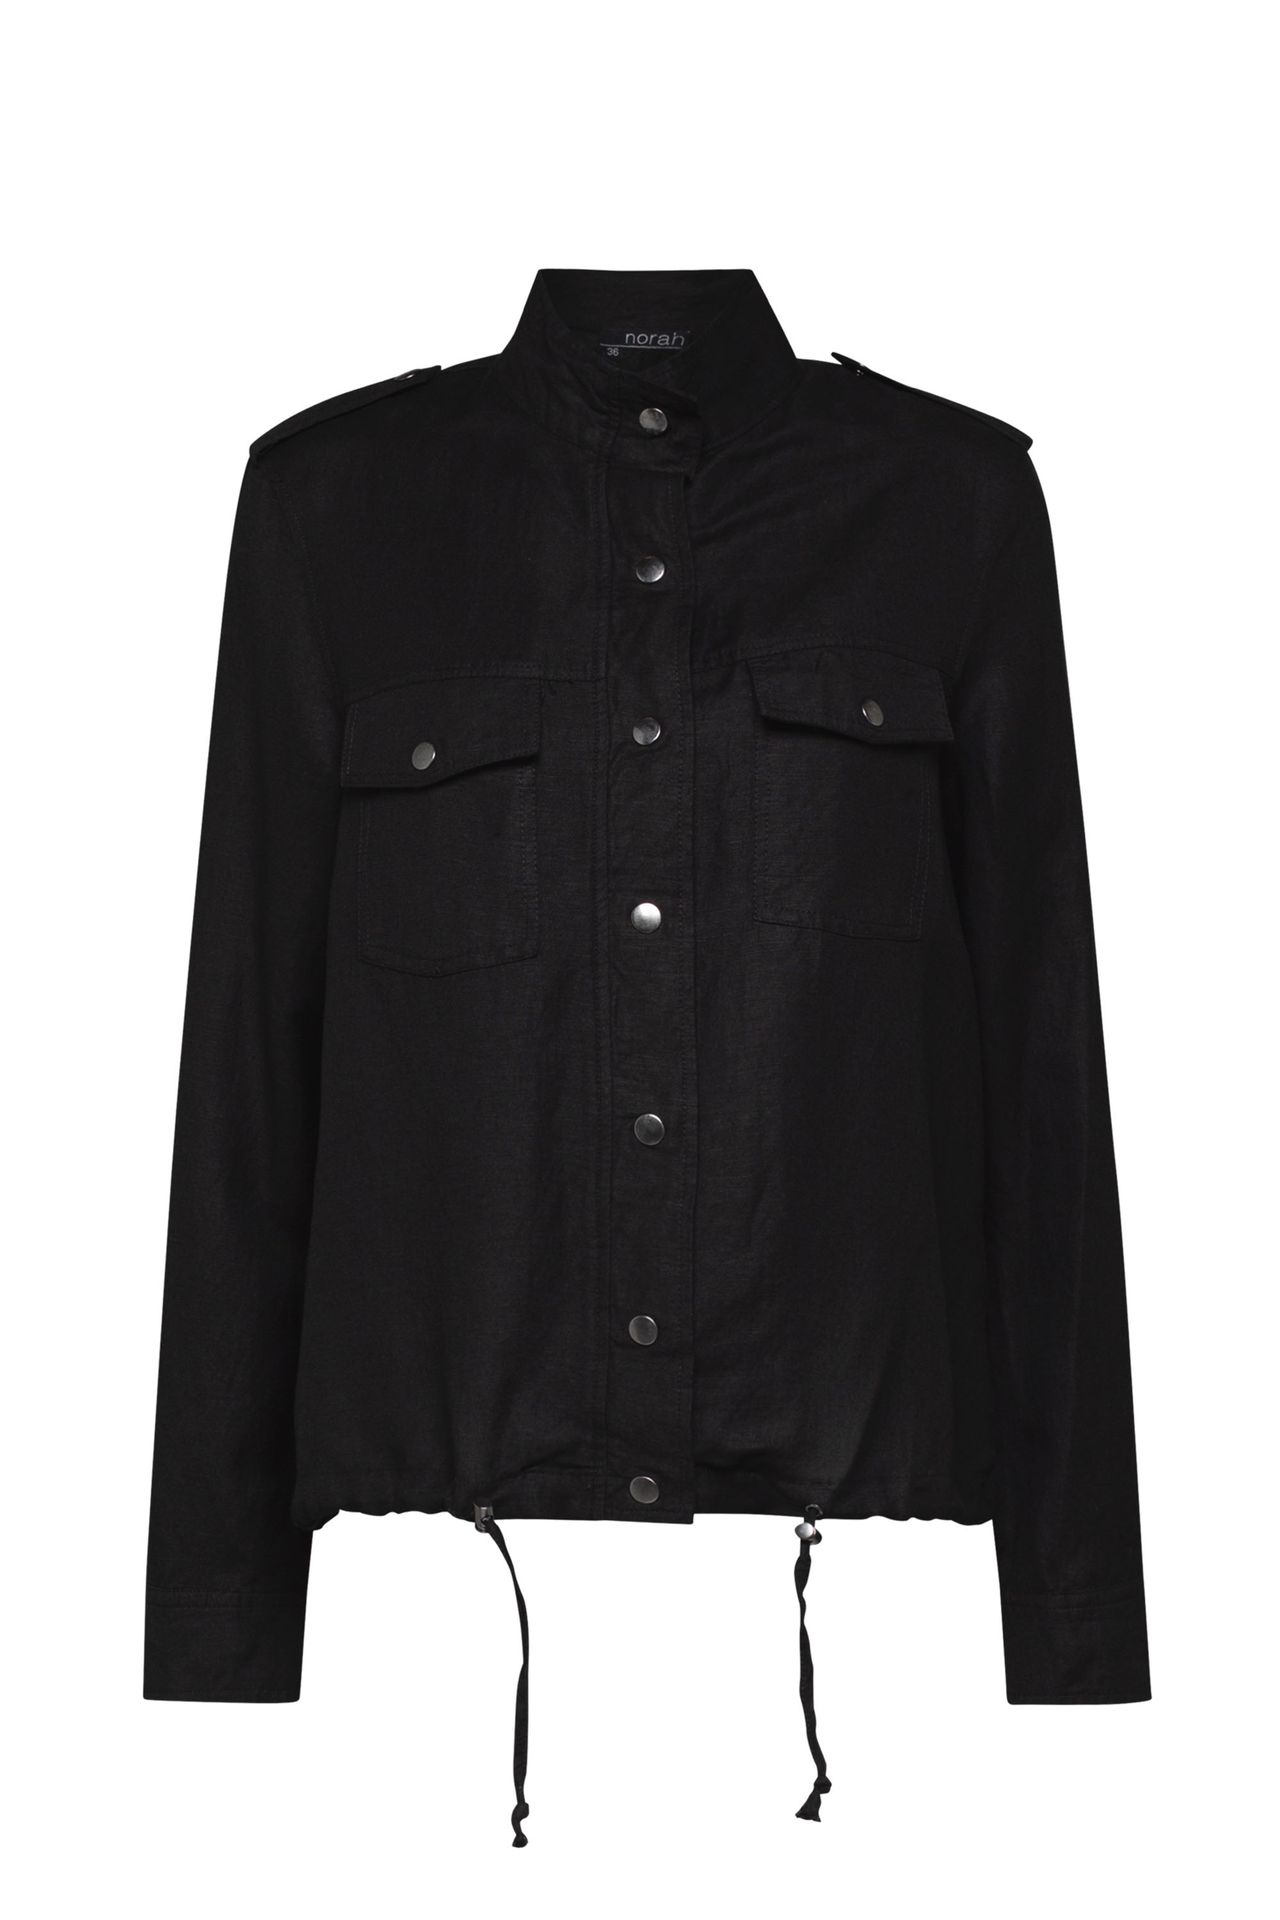  Jacket zwart black 211085-001